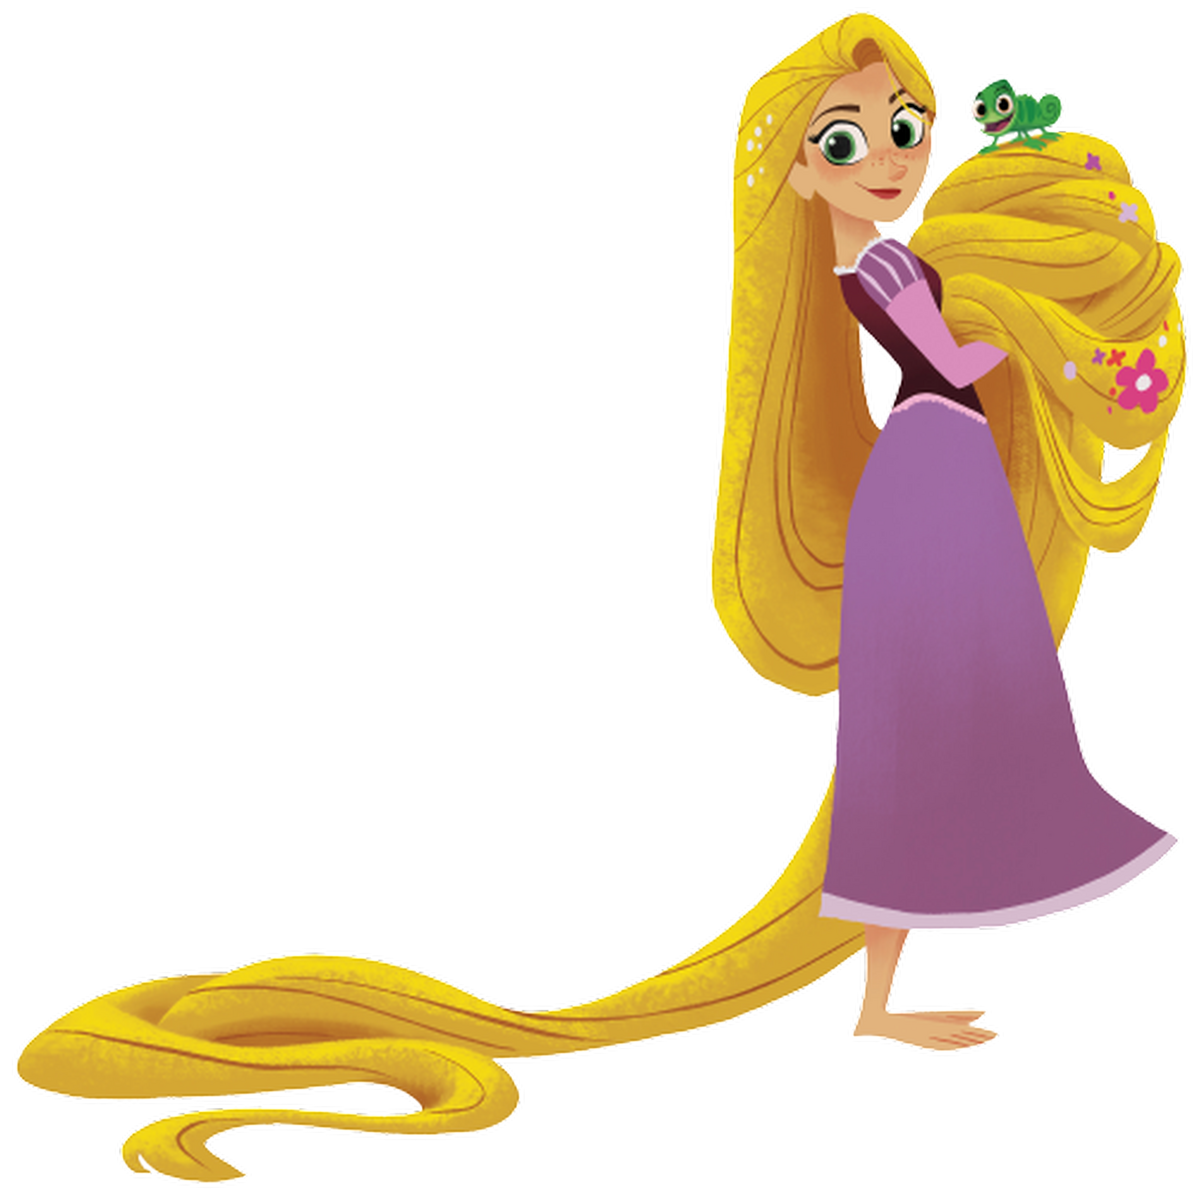 Rapunzel | Tangled Wiki | Fandom